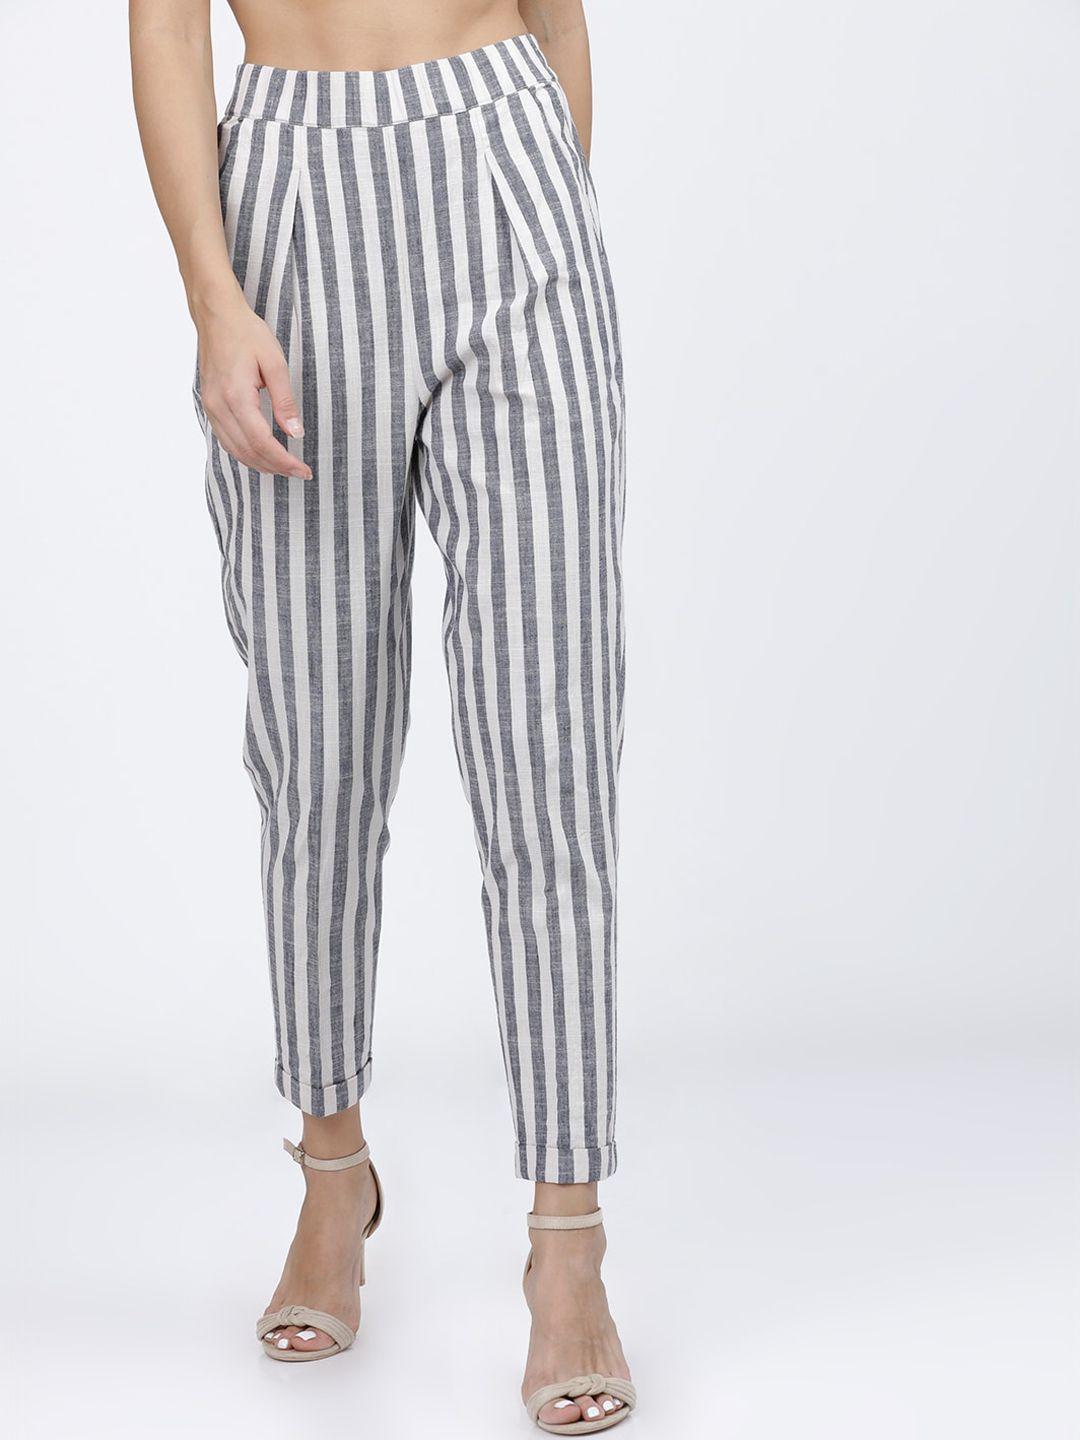 tokyo-talkies-women-white-&black-striped-cigarette-trousers